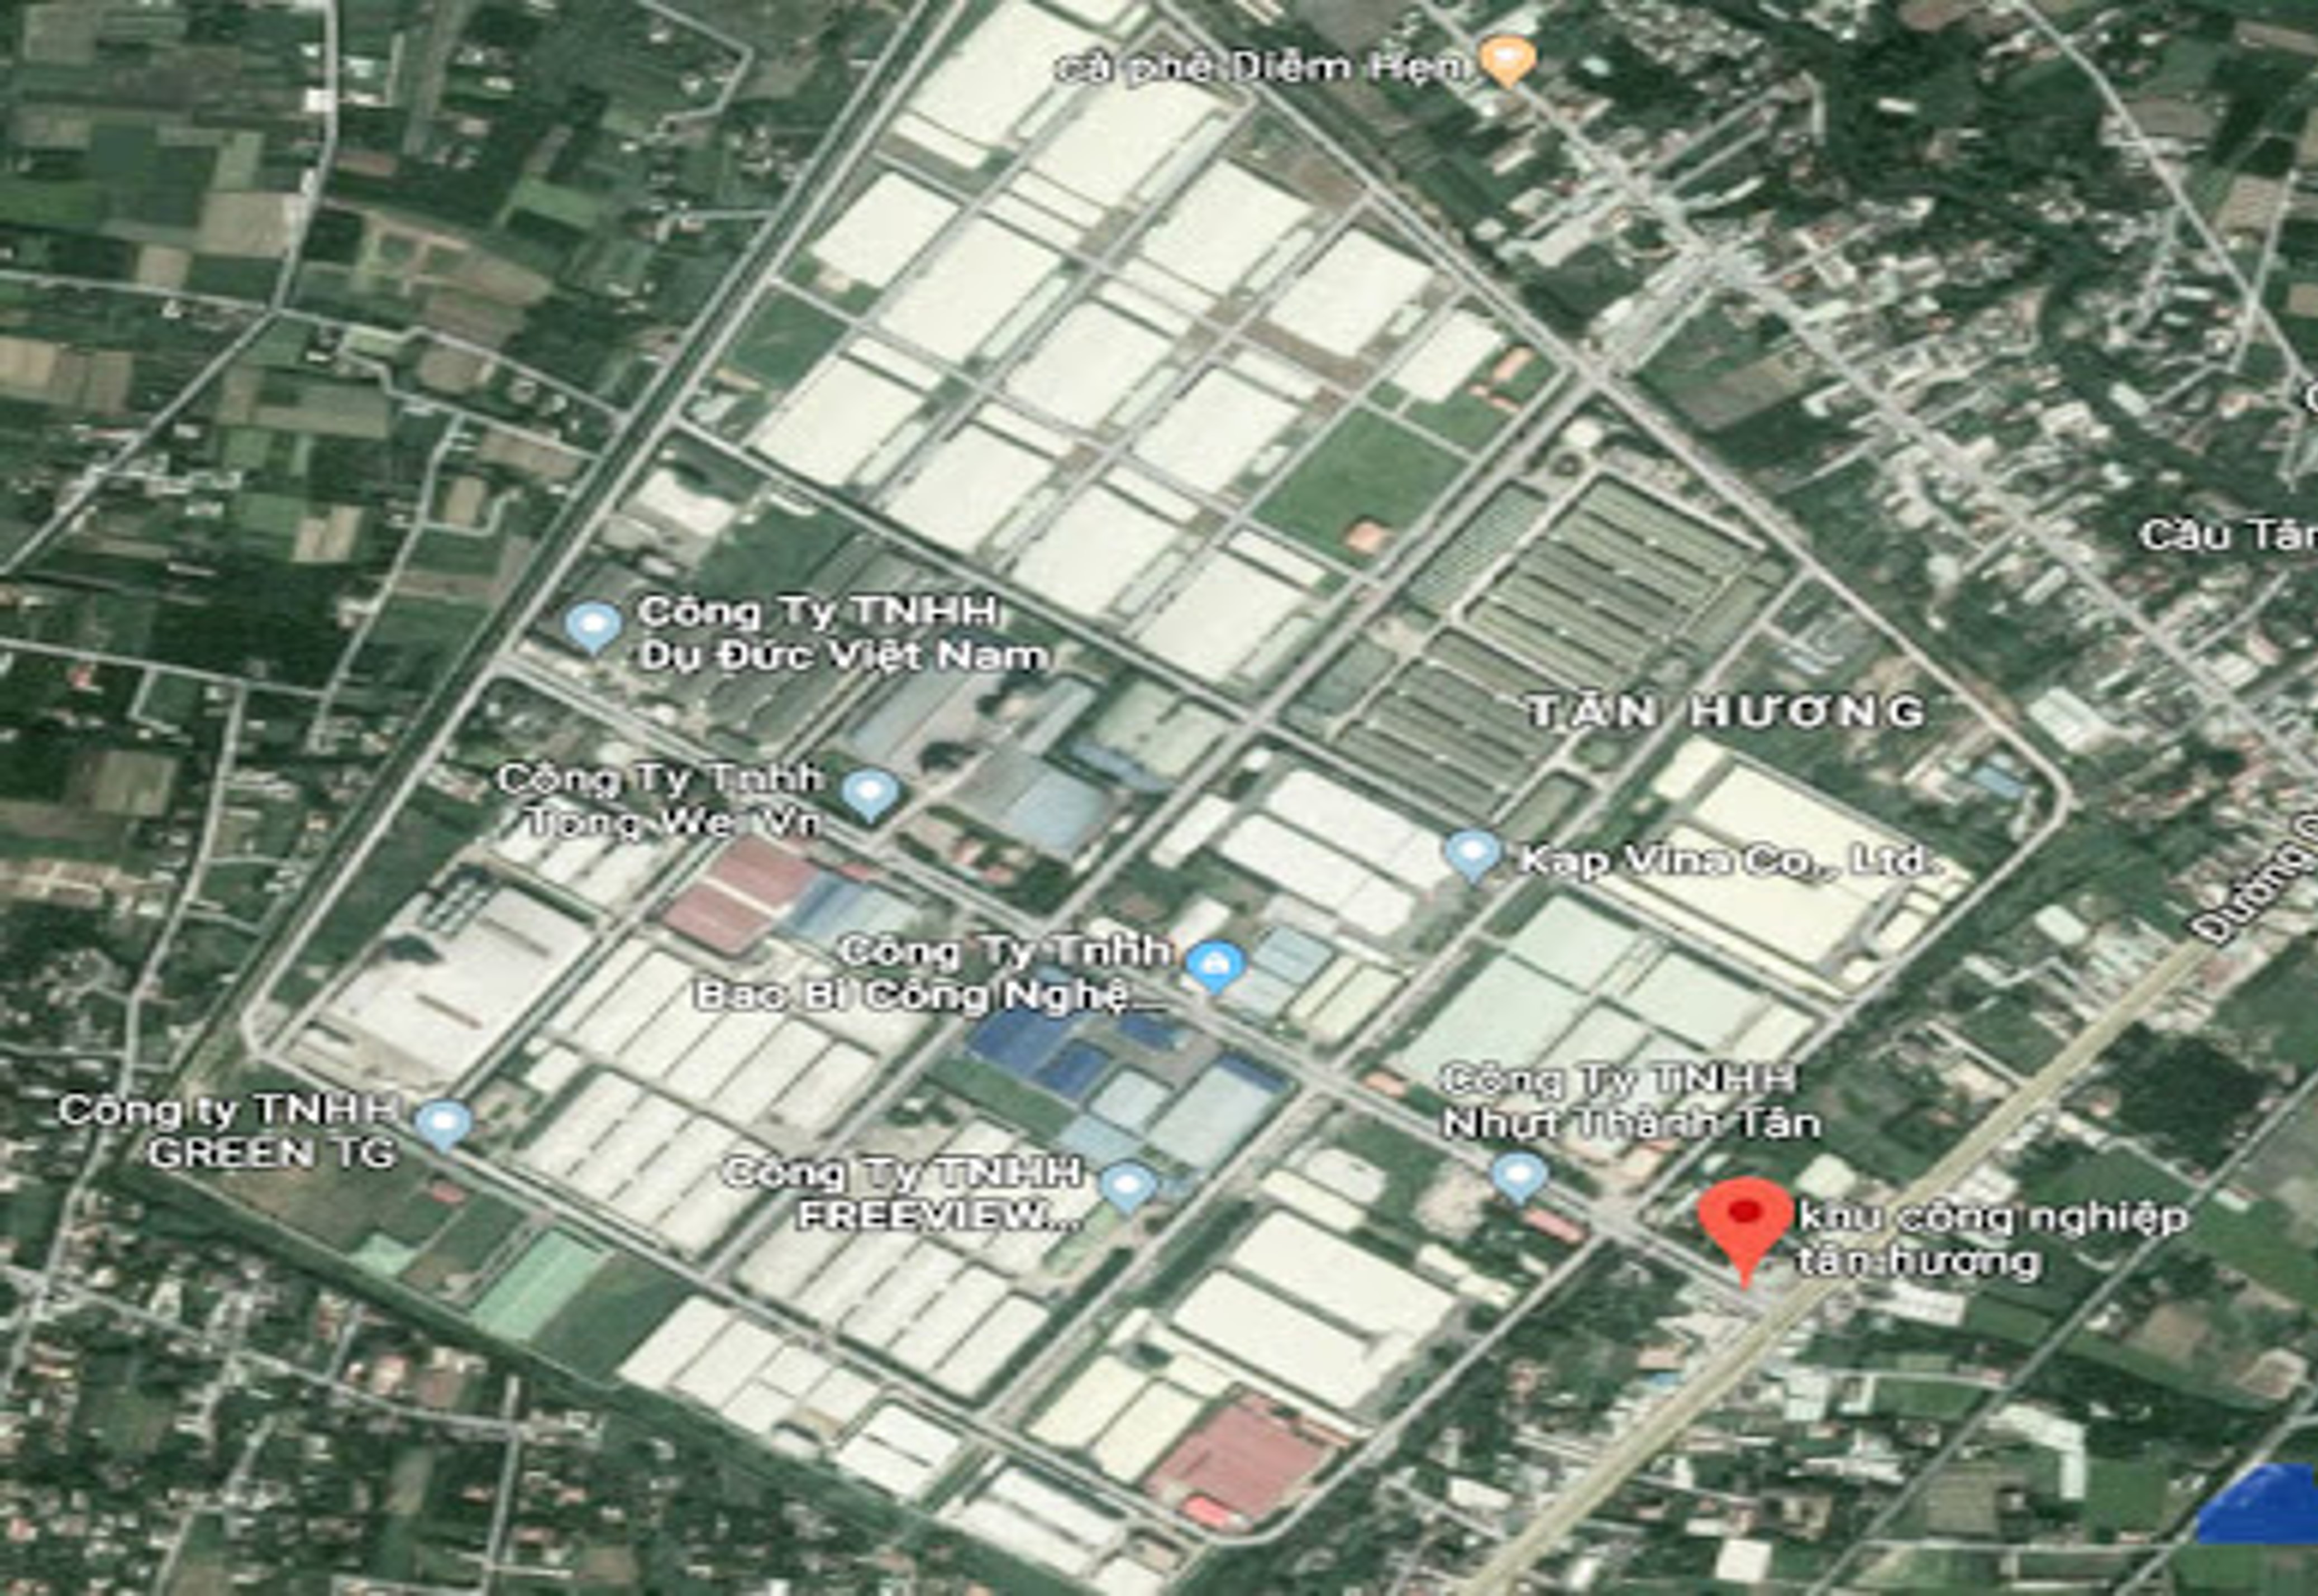 Tan Huong Industrial Park